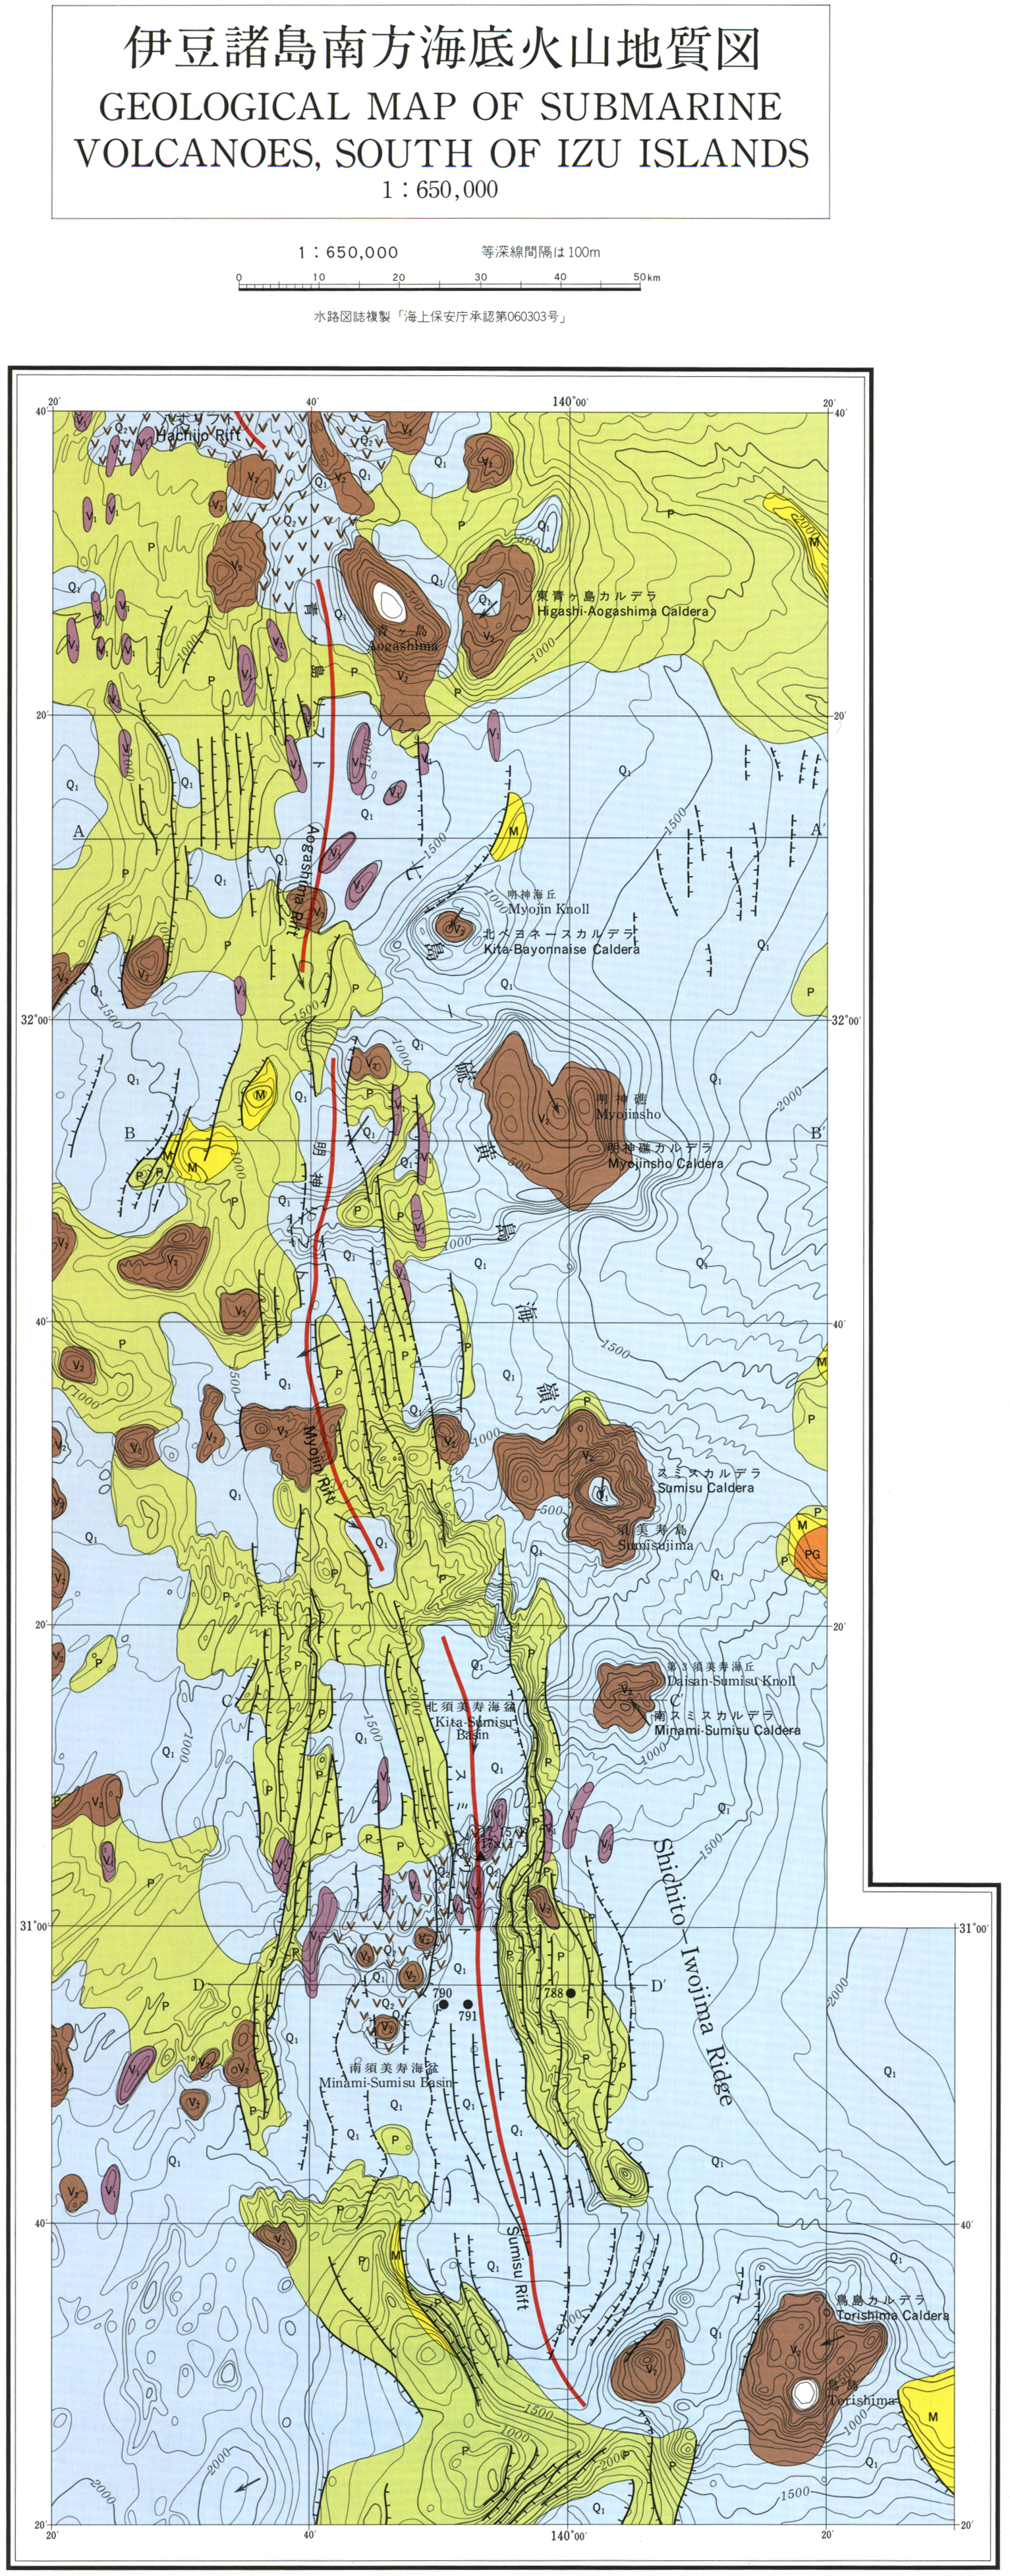 IzuIsland_geologicmap